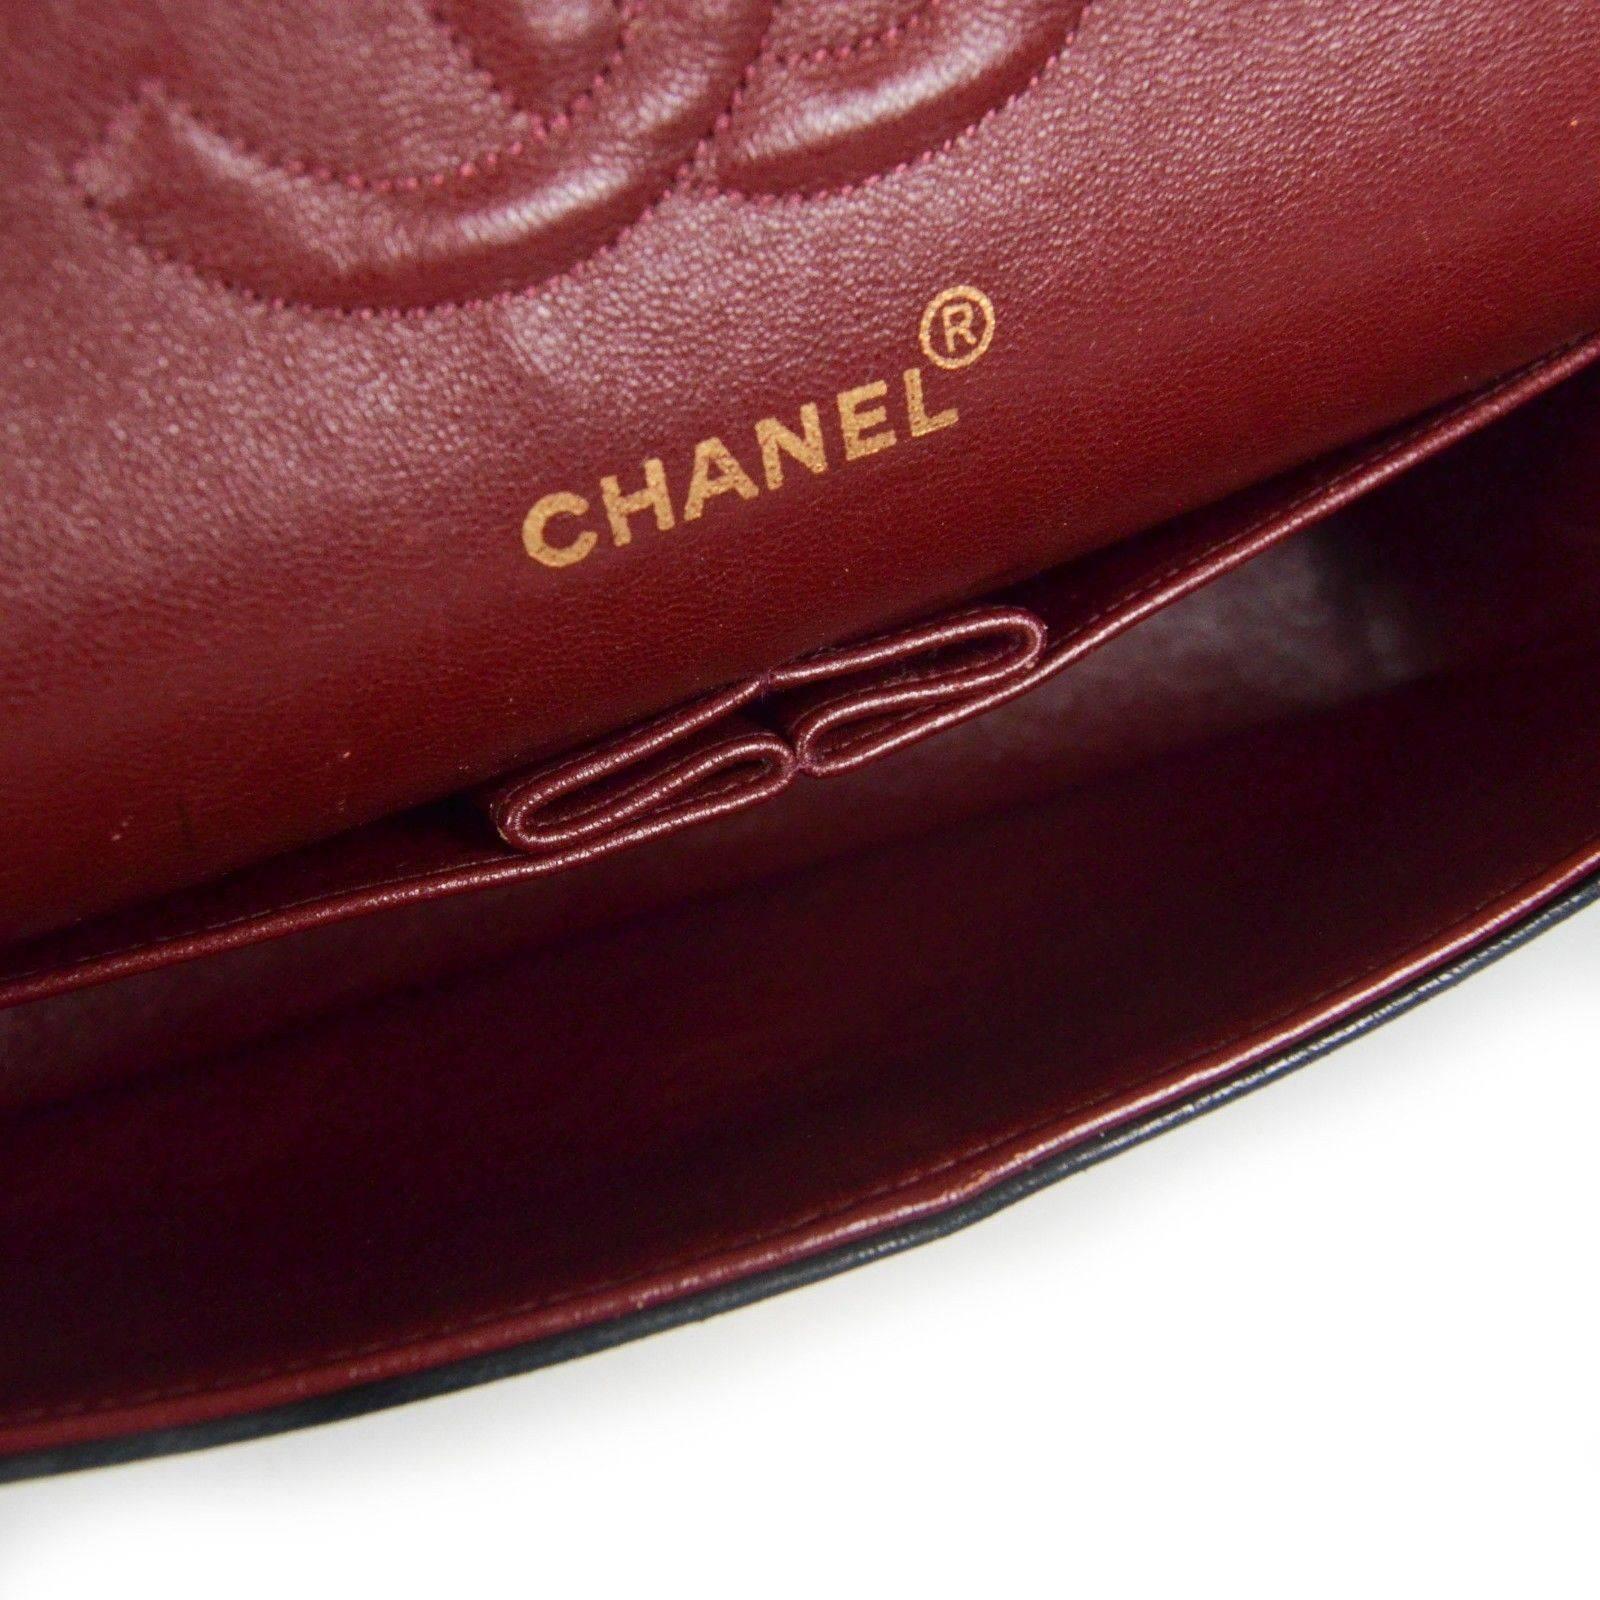 Chanel Medium Black Leather Bag - Quilted Double Flap CC Gold Shoulder Handbag 5